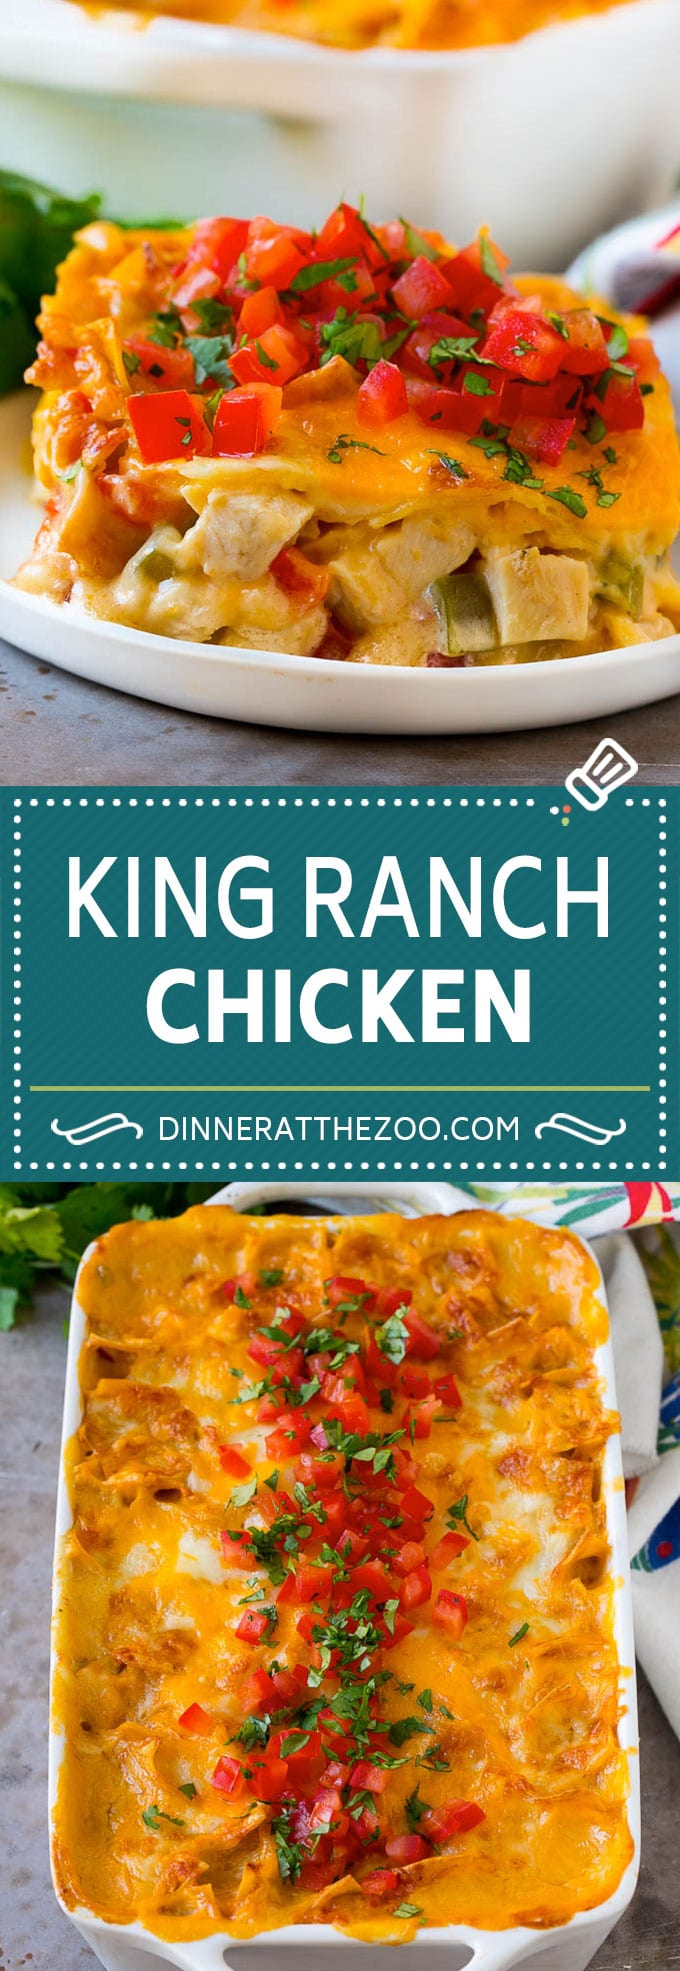 King Ranch Chicken Recipe | Mexican Chicken Casserole | Creamy Chicken Casserole #casserole #chicken #cheese #comfortfood #dinner #dinneratthezoo